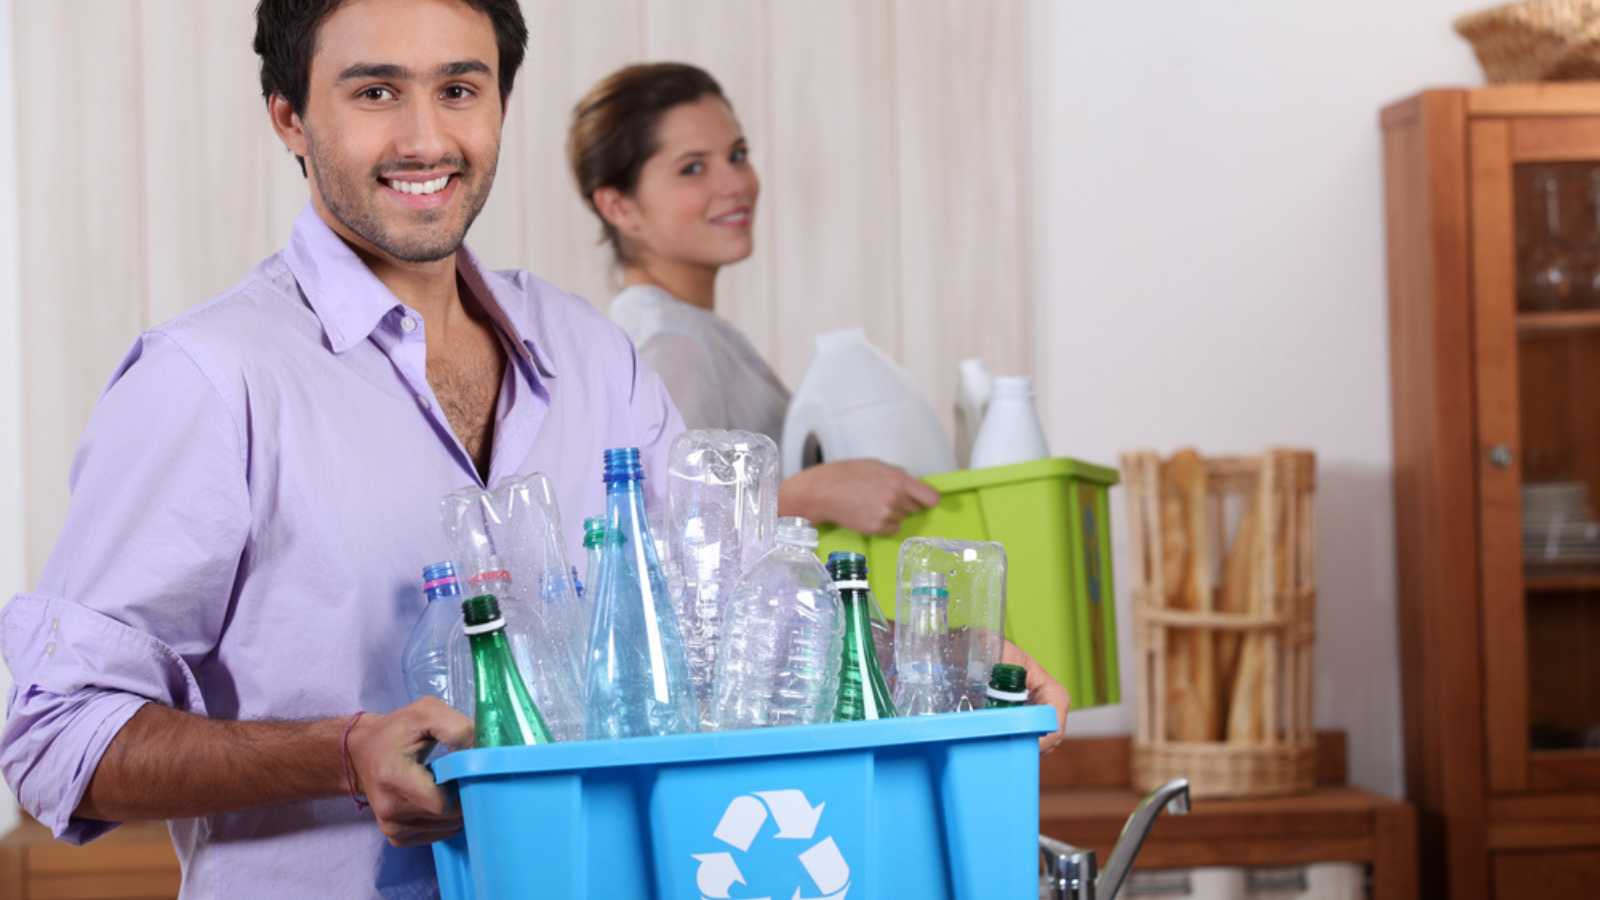 8 Recycling Plastic Shutterstock